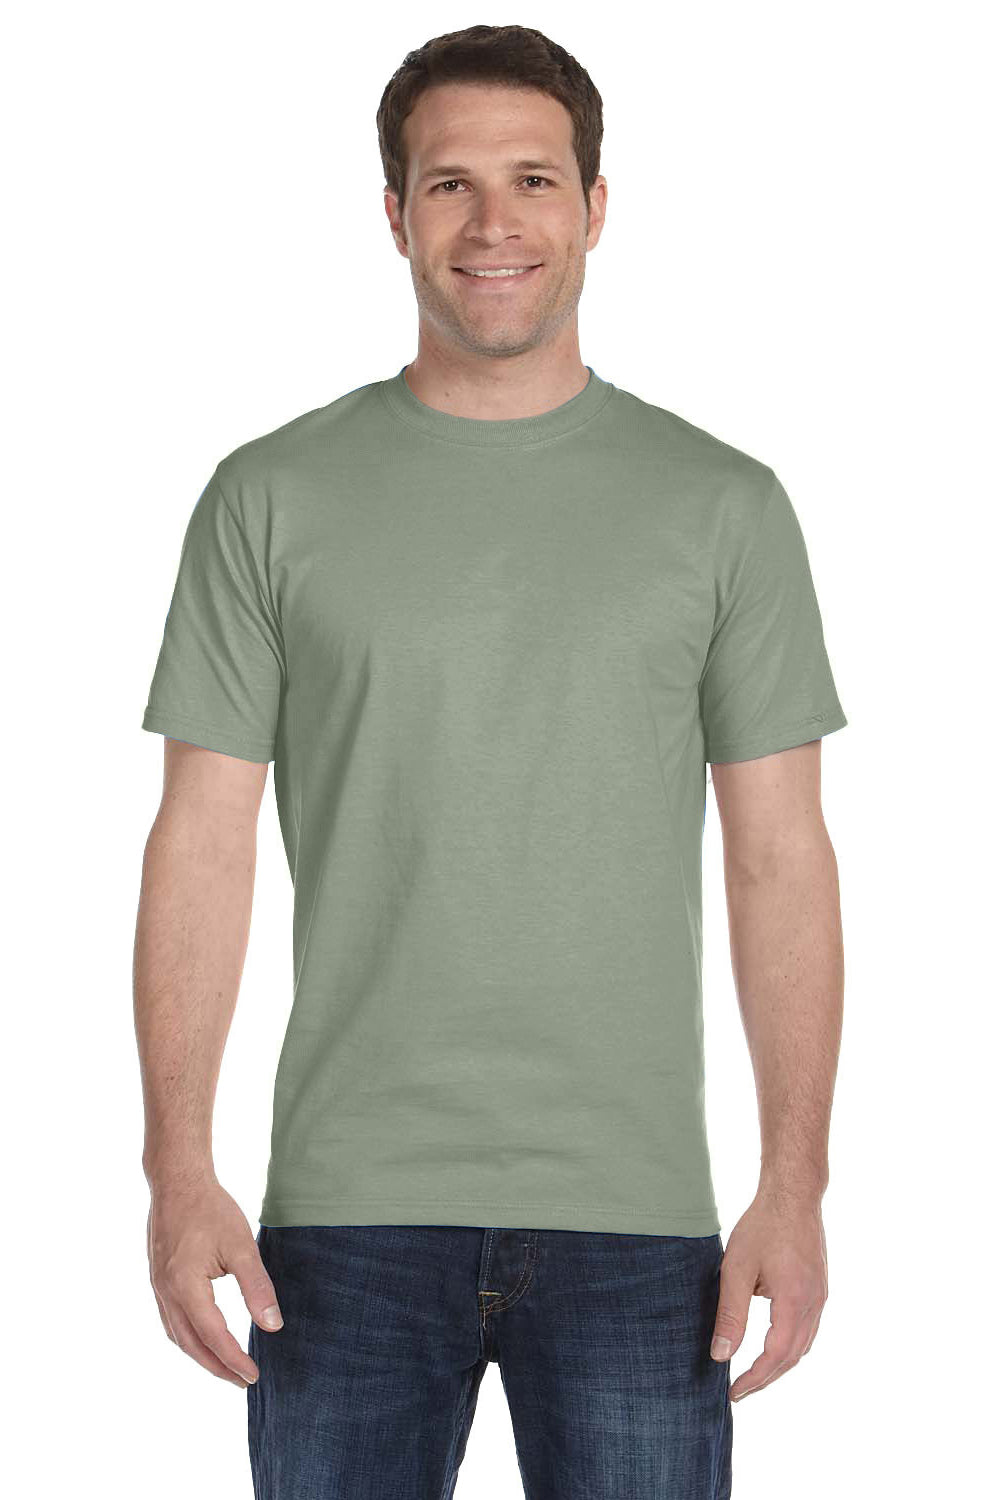 Hanes 5280 Mens ComfortSoft Short Sleeve Crewneck T-Shirt Stonewashed Green Front